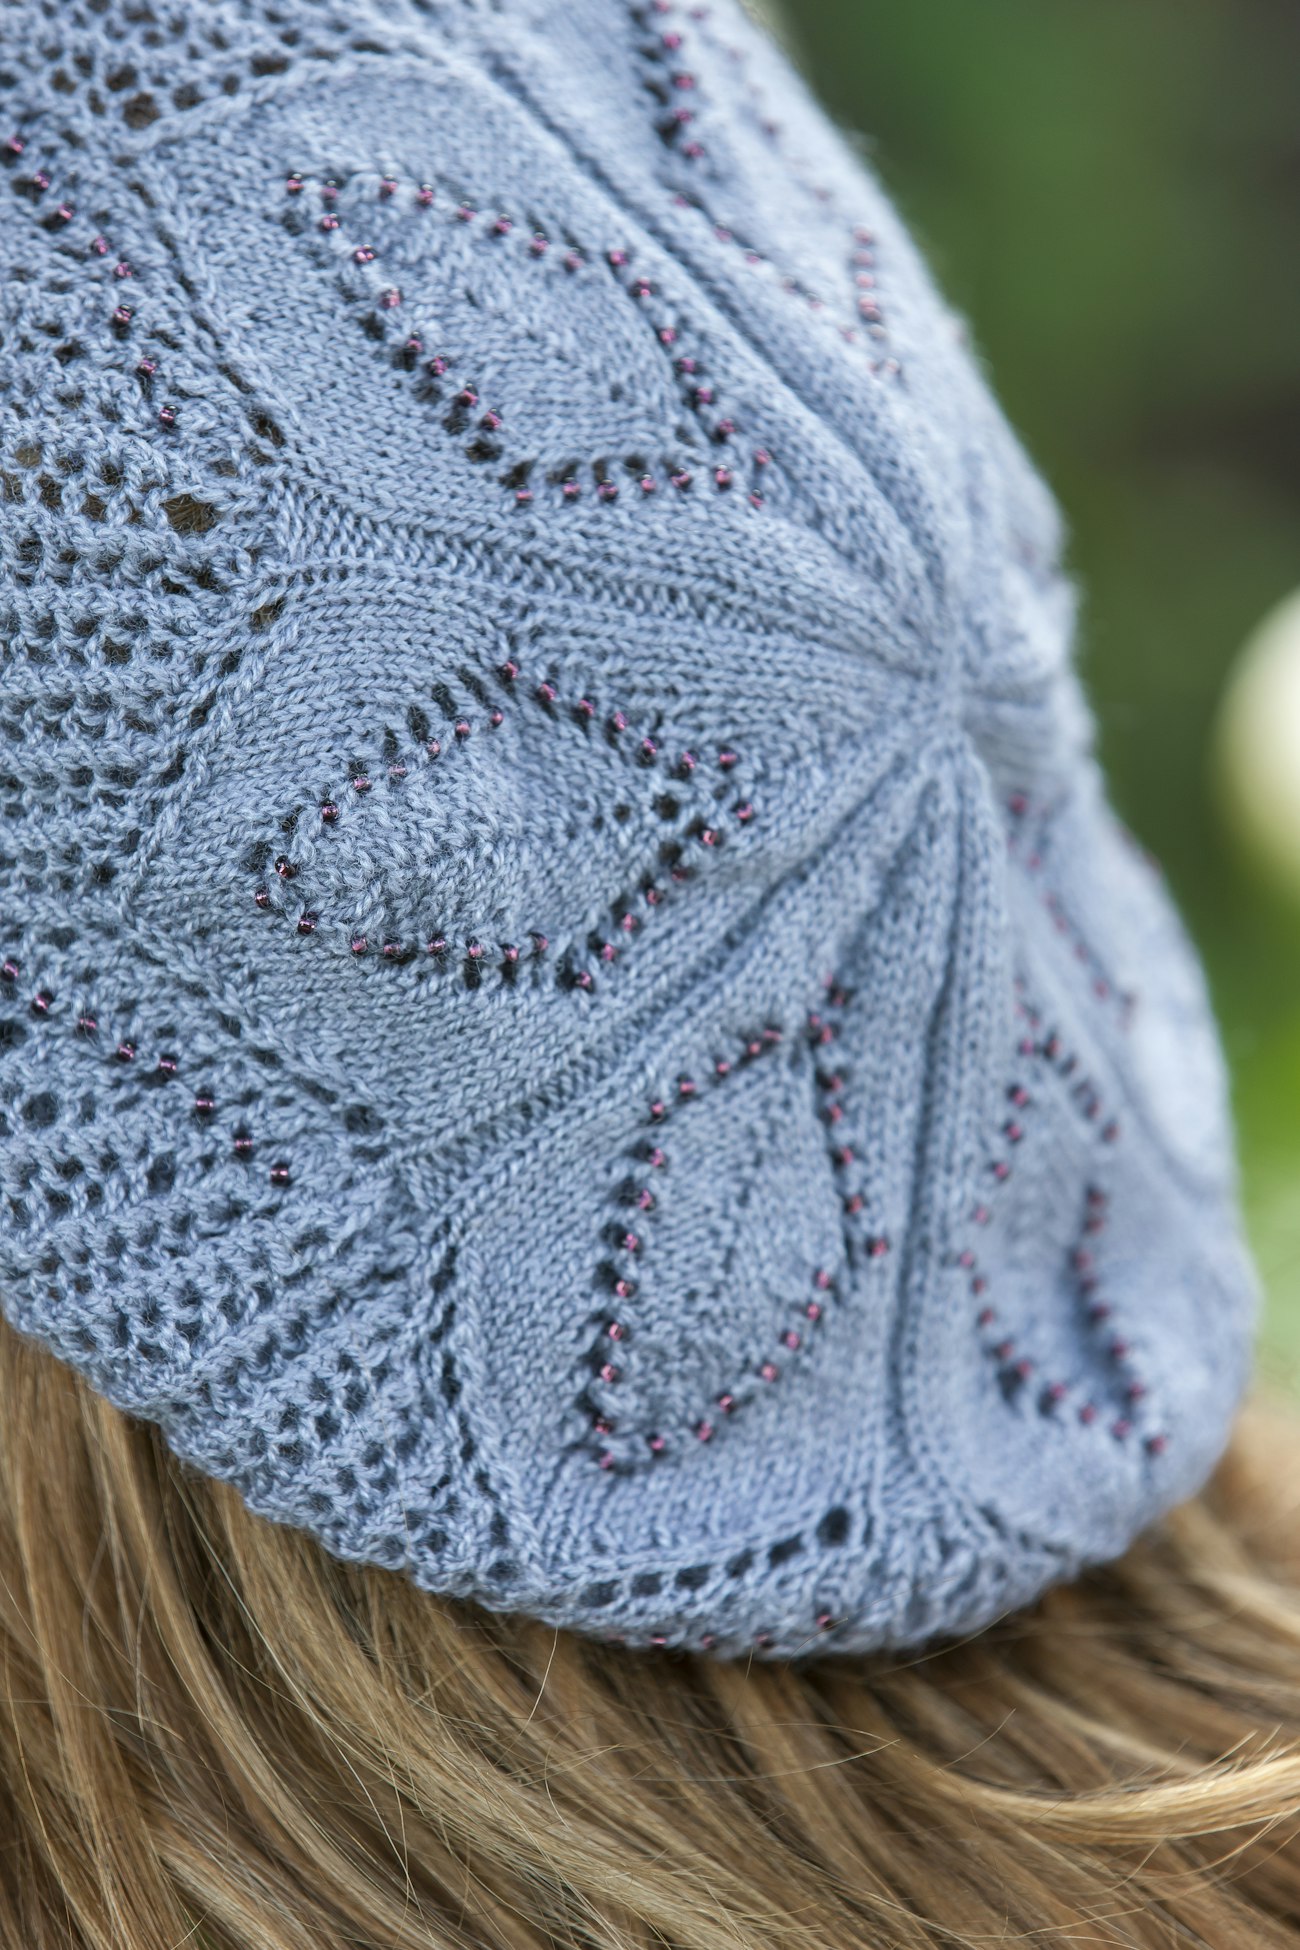 Sansa's hat to knit 